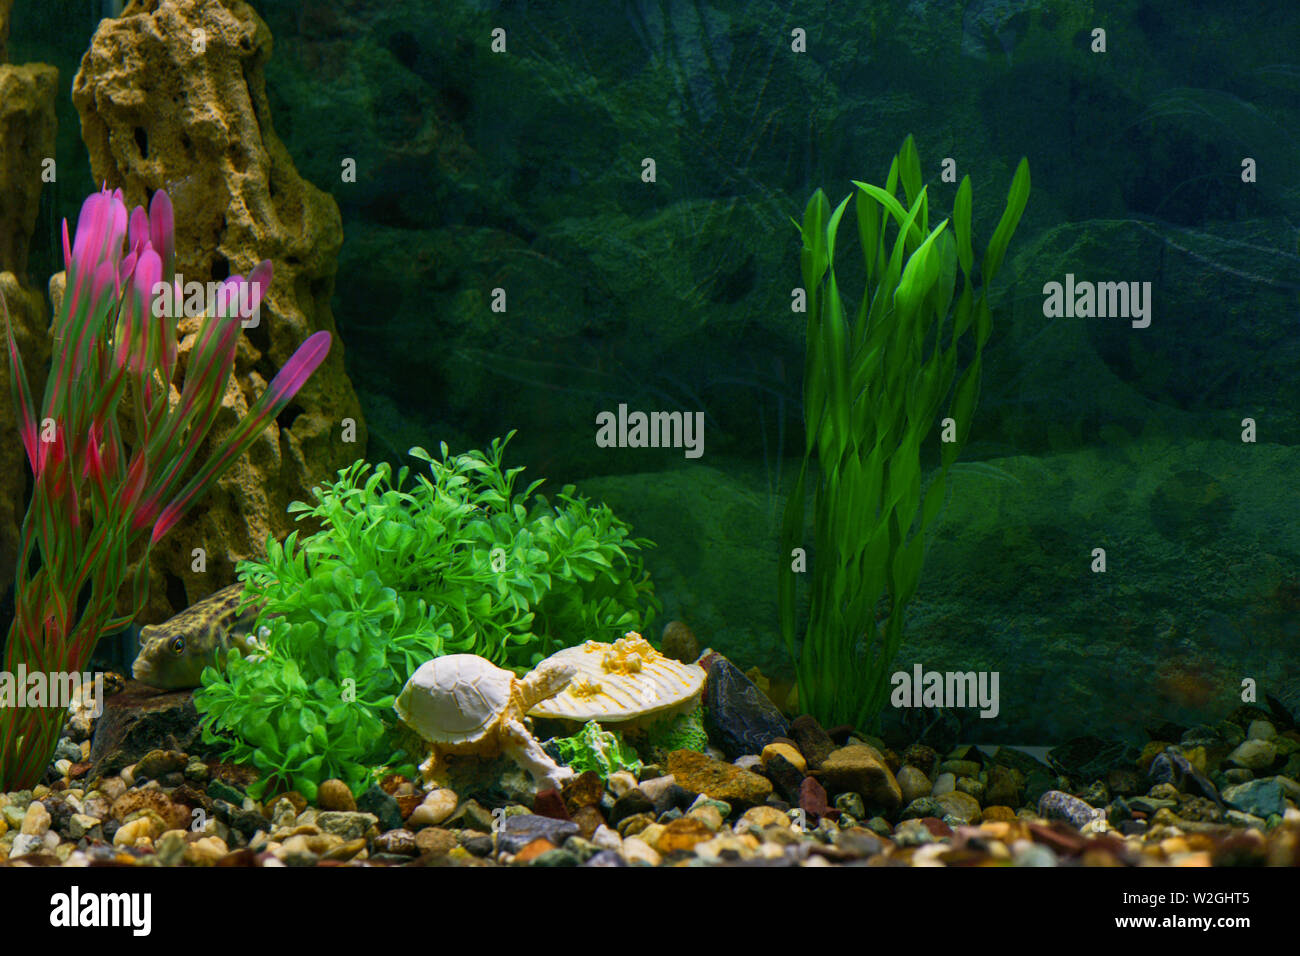 Aquarium decoration stock photography and images Alamy